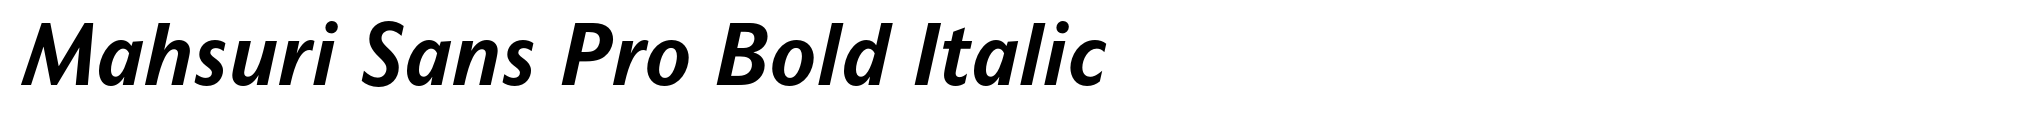 Mahsuri Sans Pro Bold Italic image